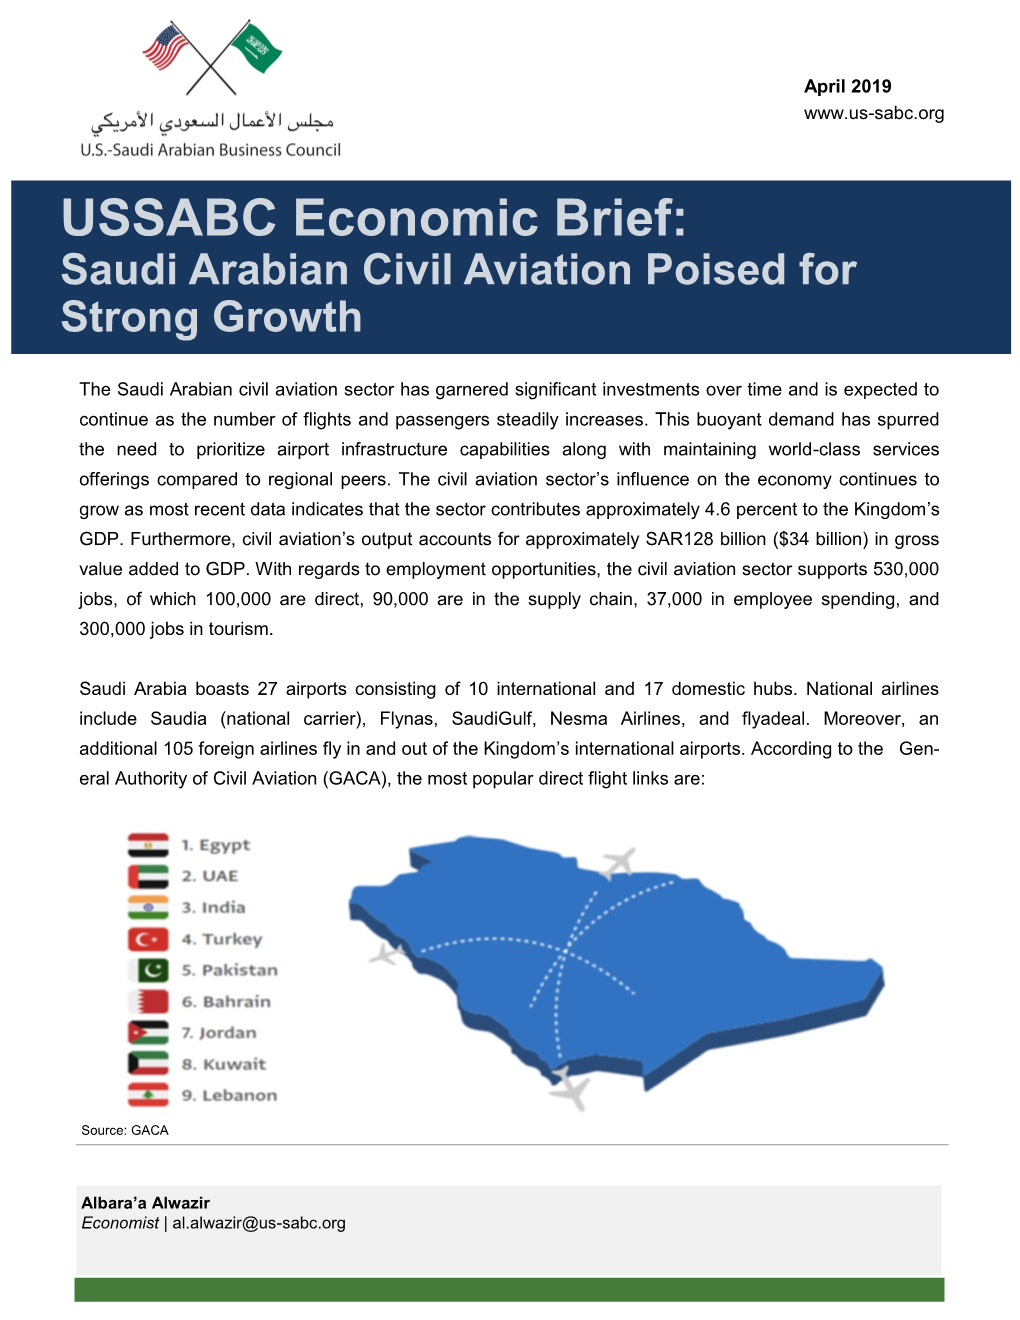 USSABC Economic Brief: Saudi Arabian Civil Aviation Poised for Strong Growth